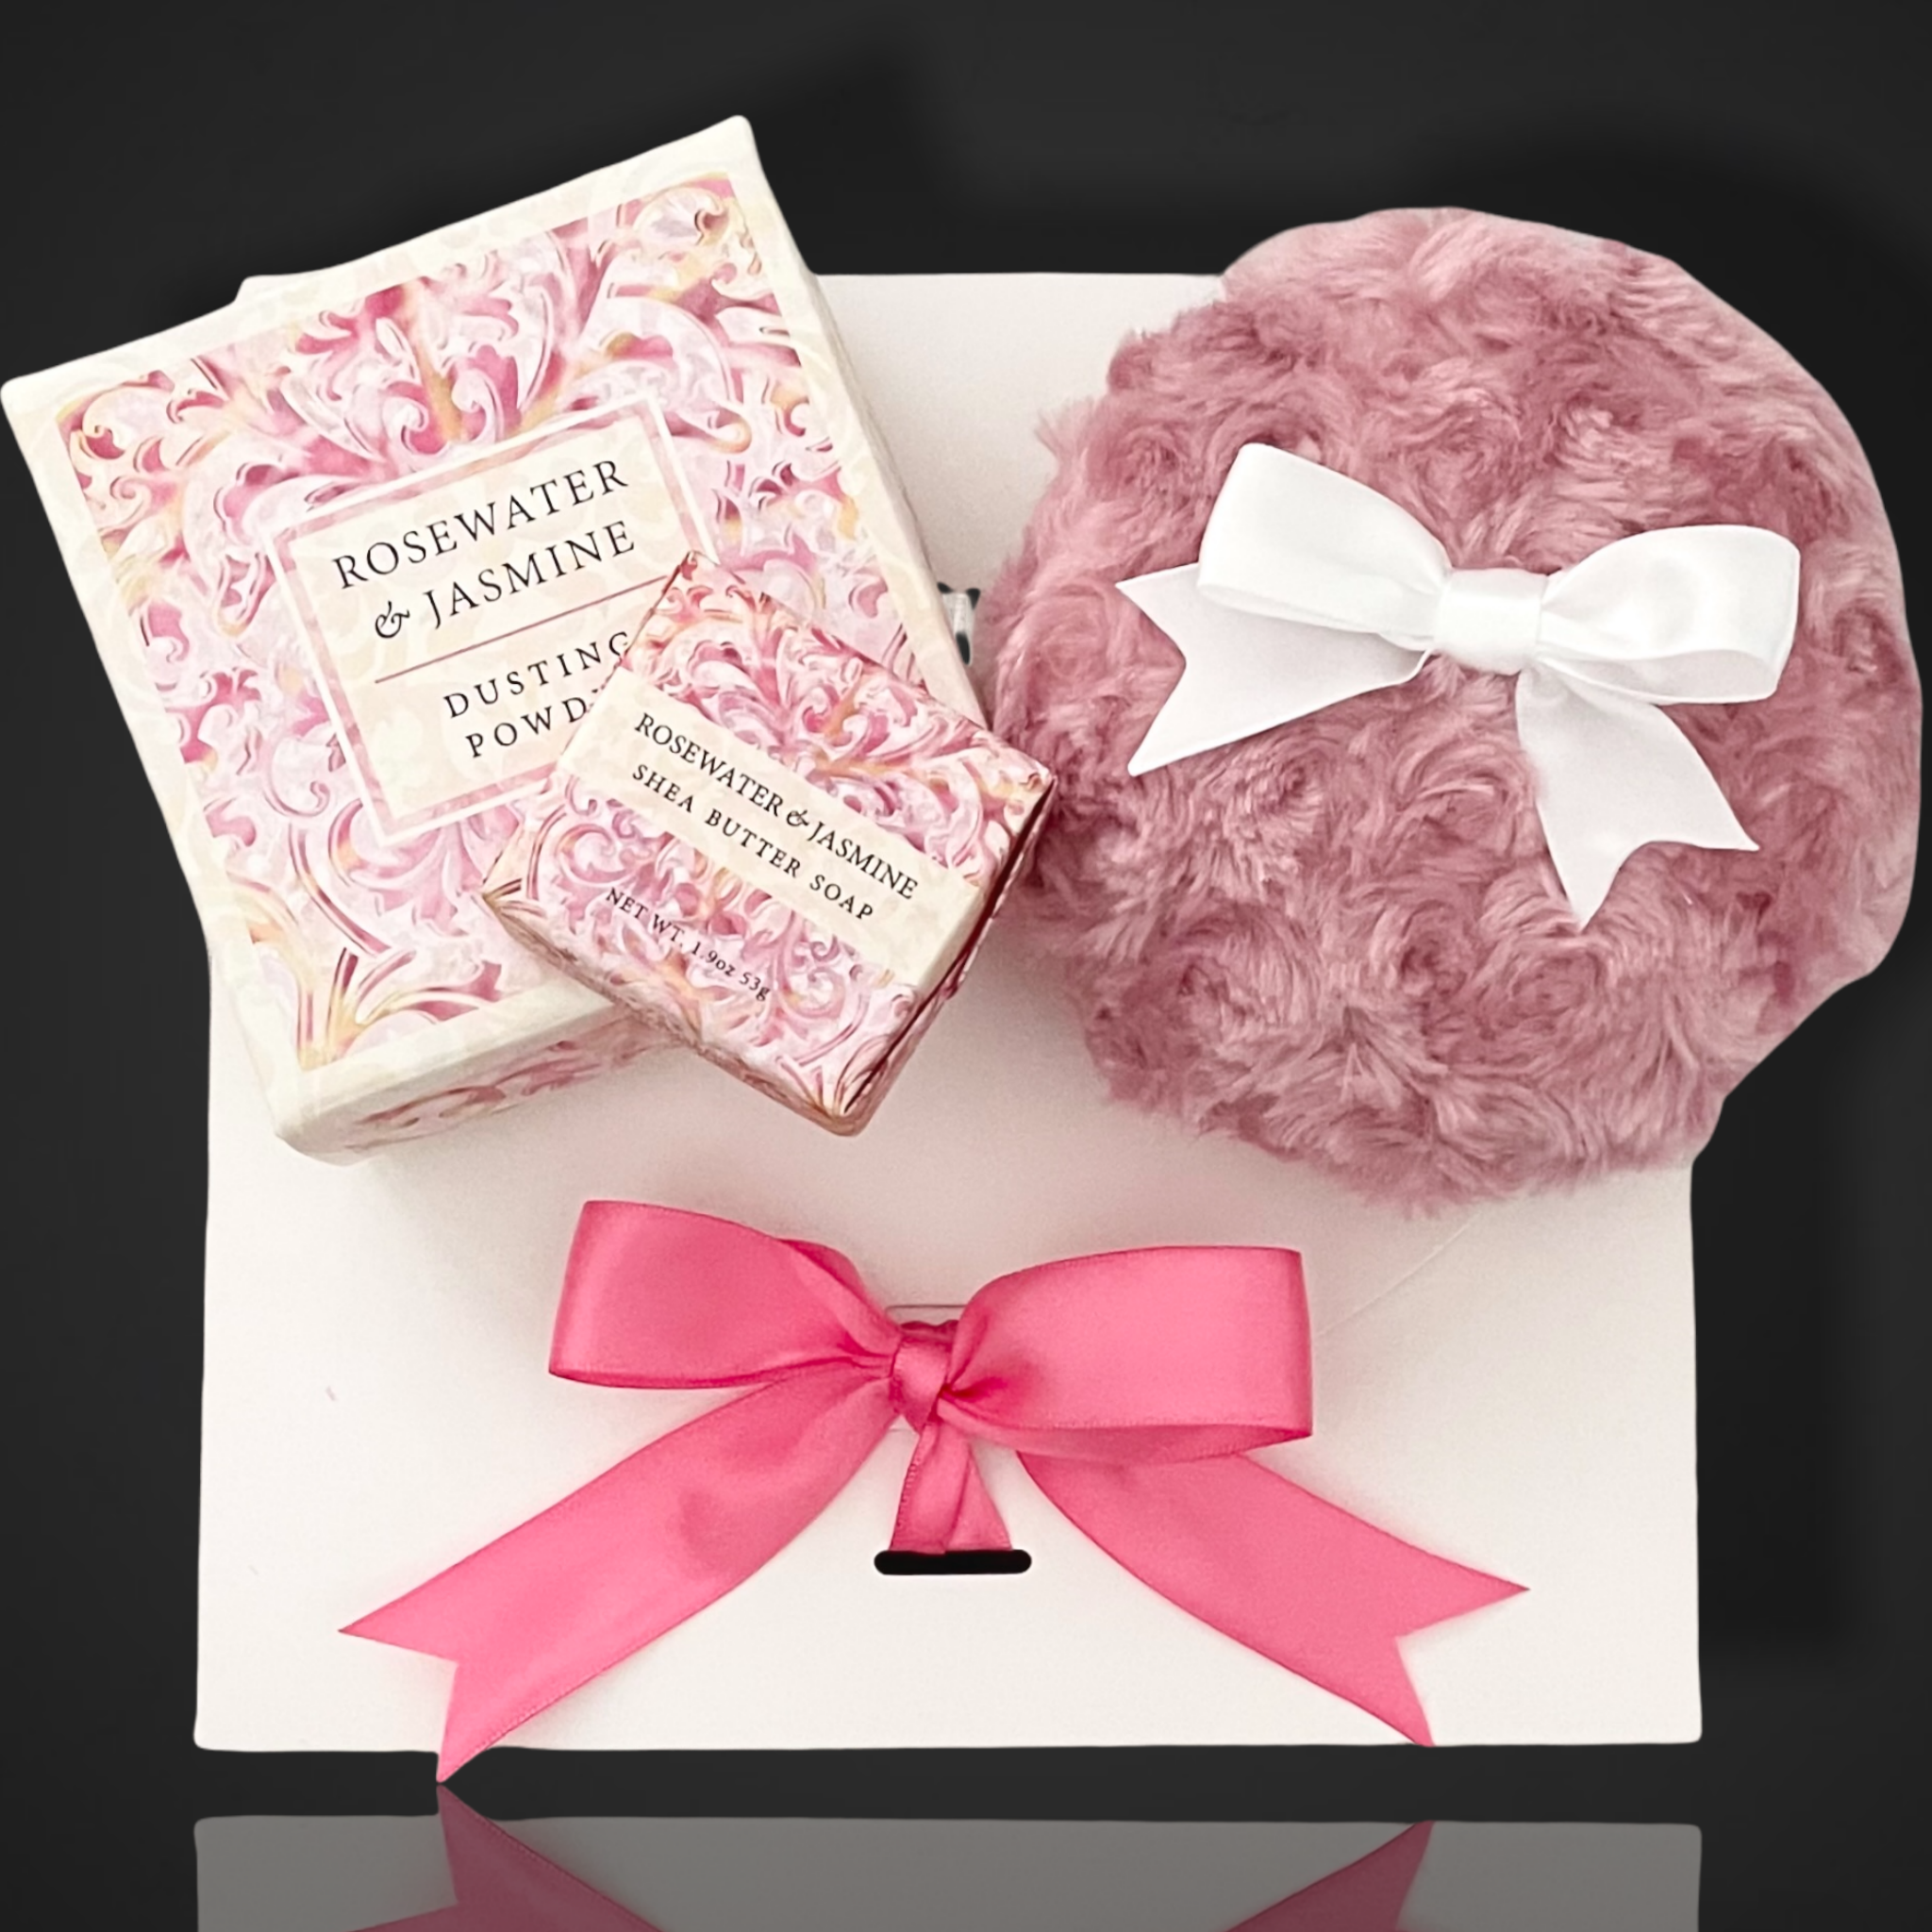 Dusting powder gift set with puff - pink - Greenwich Bay Trading Co Rosewater jasmine powder soap gift set - Merrybath.com